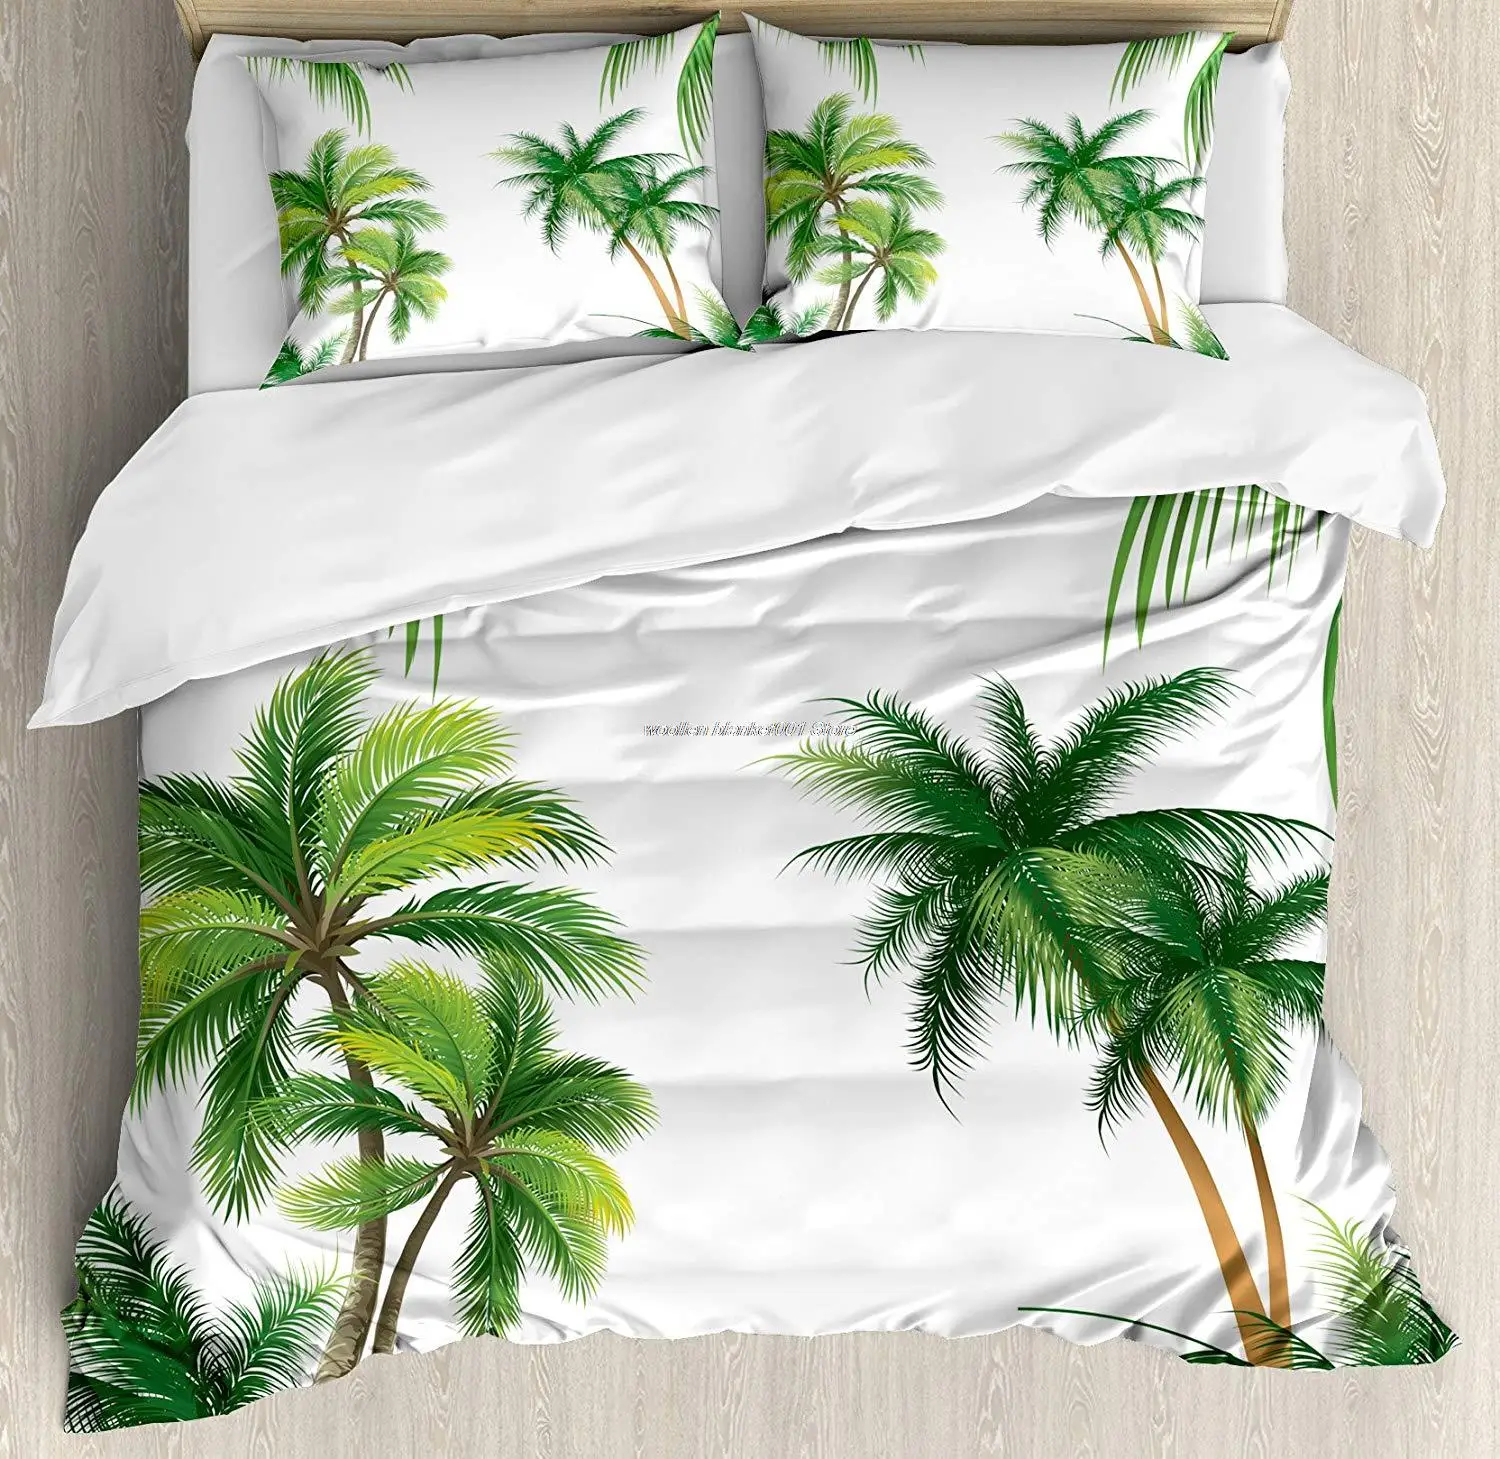 

Tropical Duvet Cover Set Coconut Palm Tree Nature Paradise Plants Foliage Leaves Digital Illustration Decorative 3 Piece Bedding